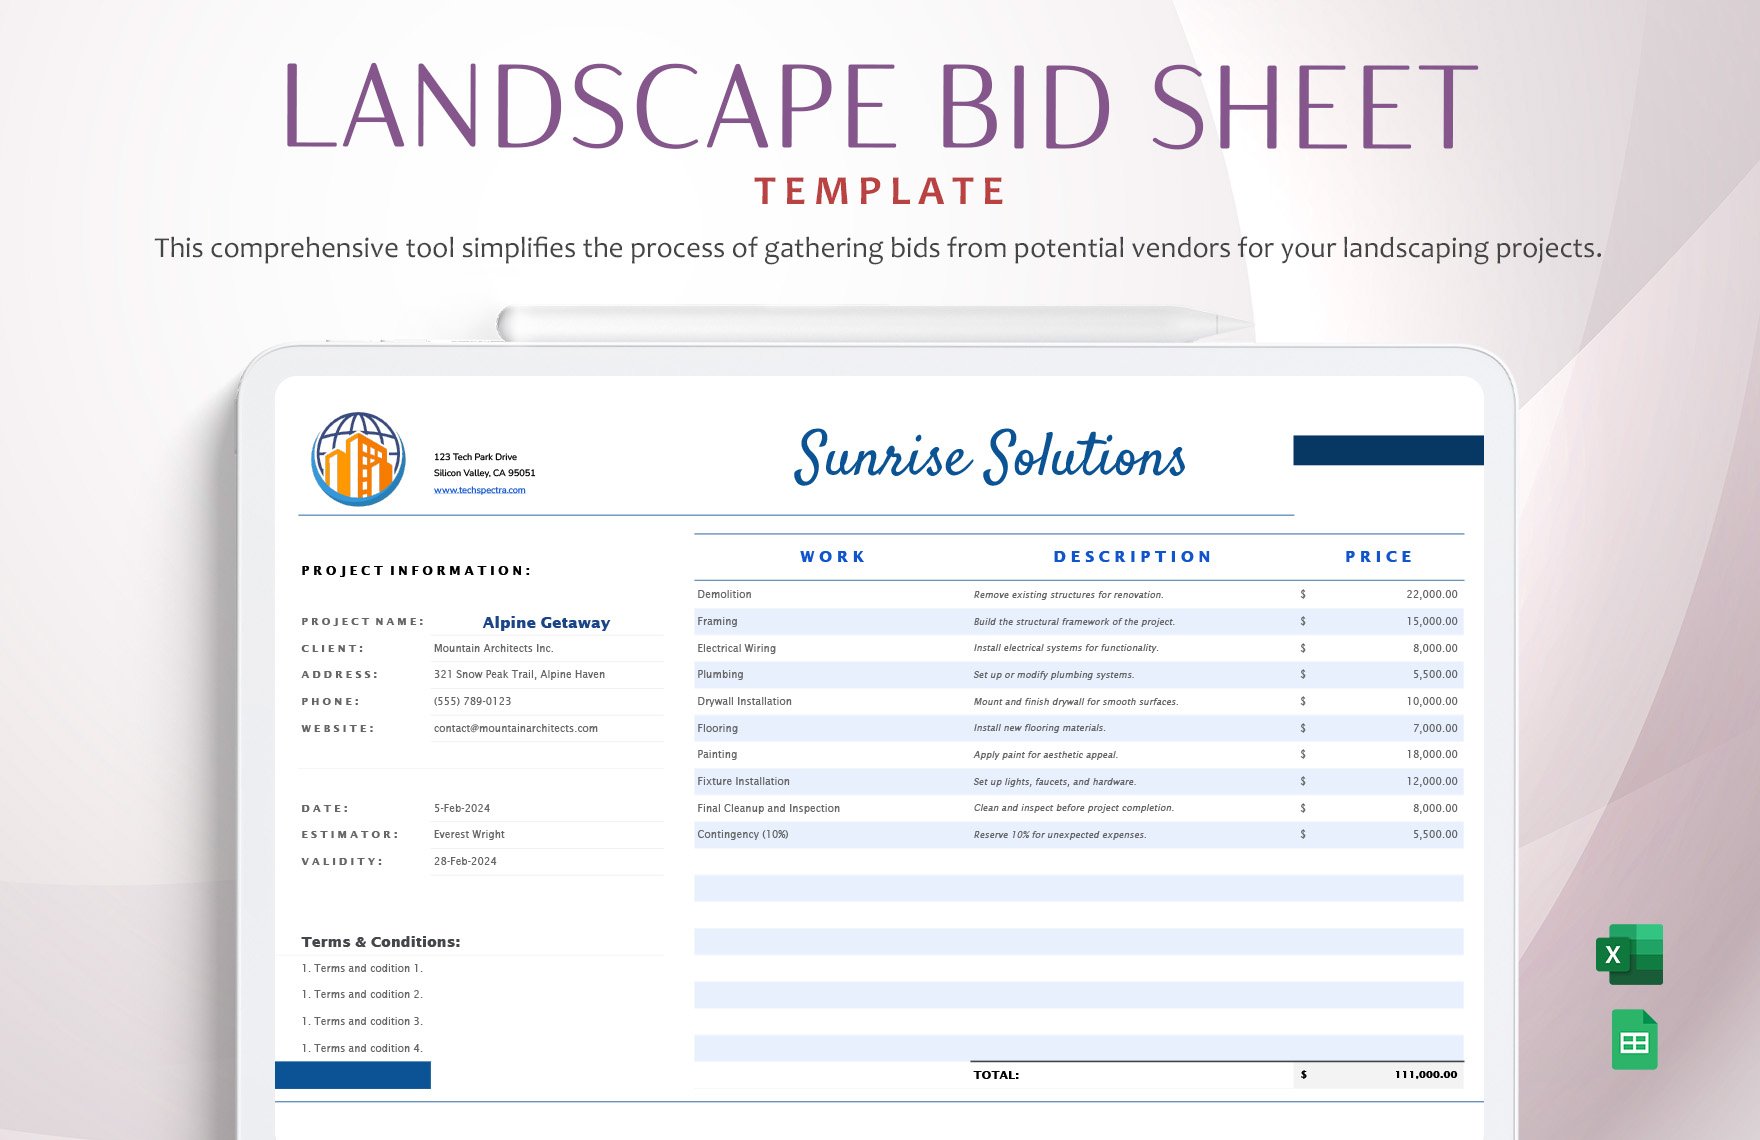 Landscape Bid Sheet Template in Excel, Google Sheets